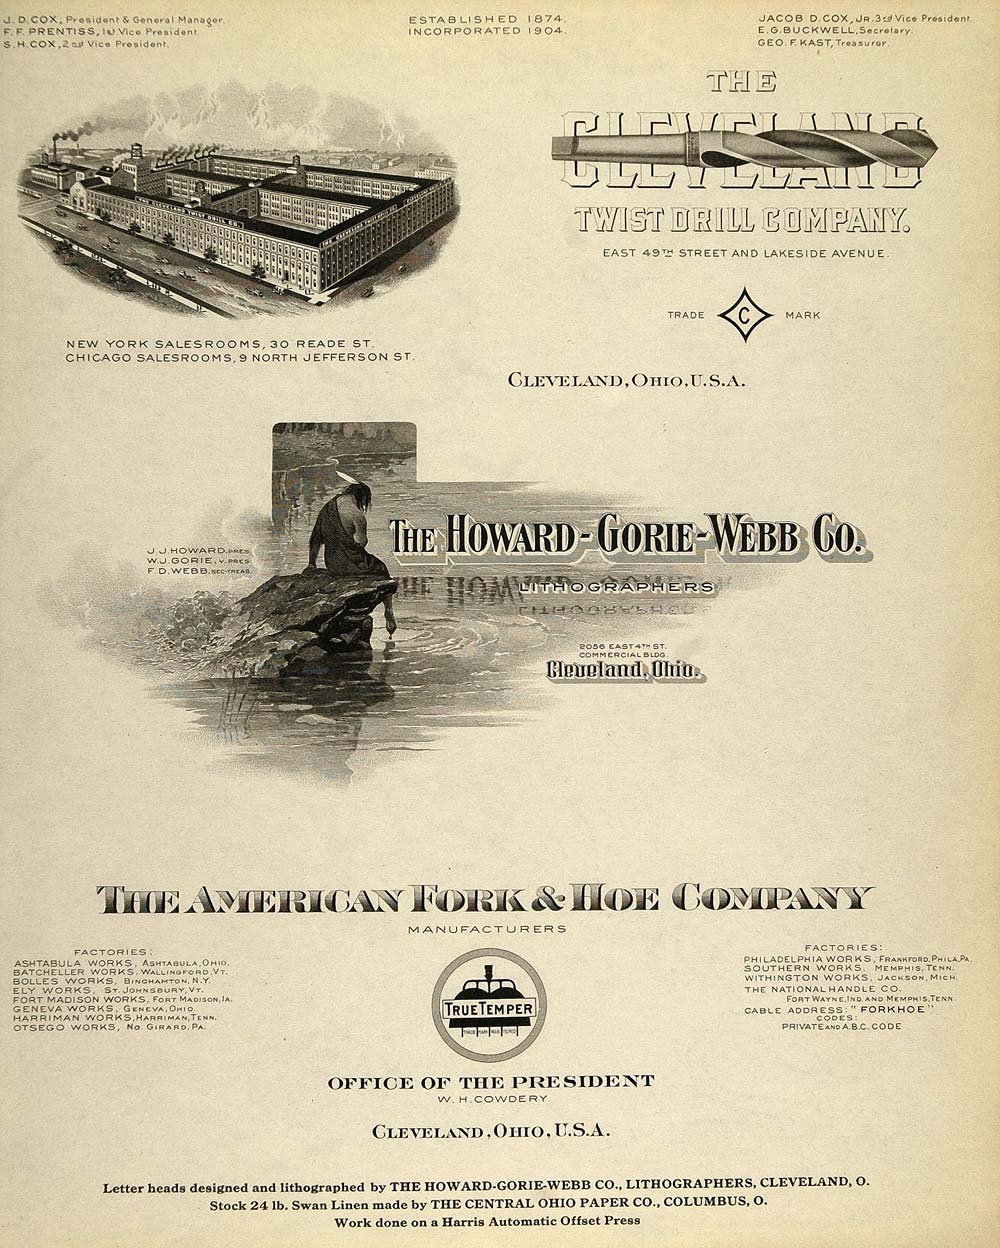 1913 Lithograph Letterhead Design Cleveland Twist Drill - ORIGINAL GAC1